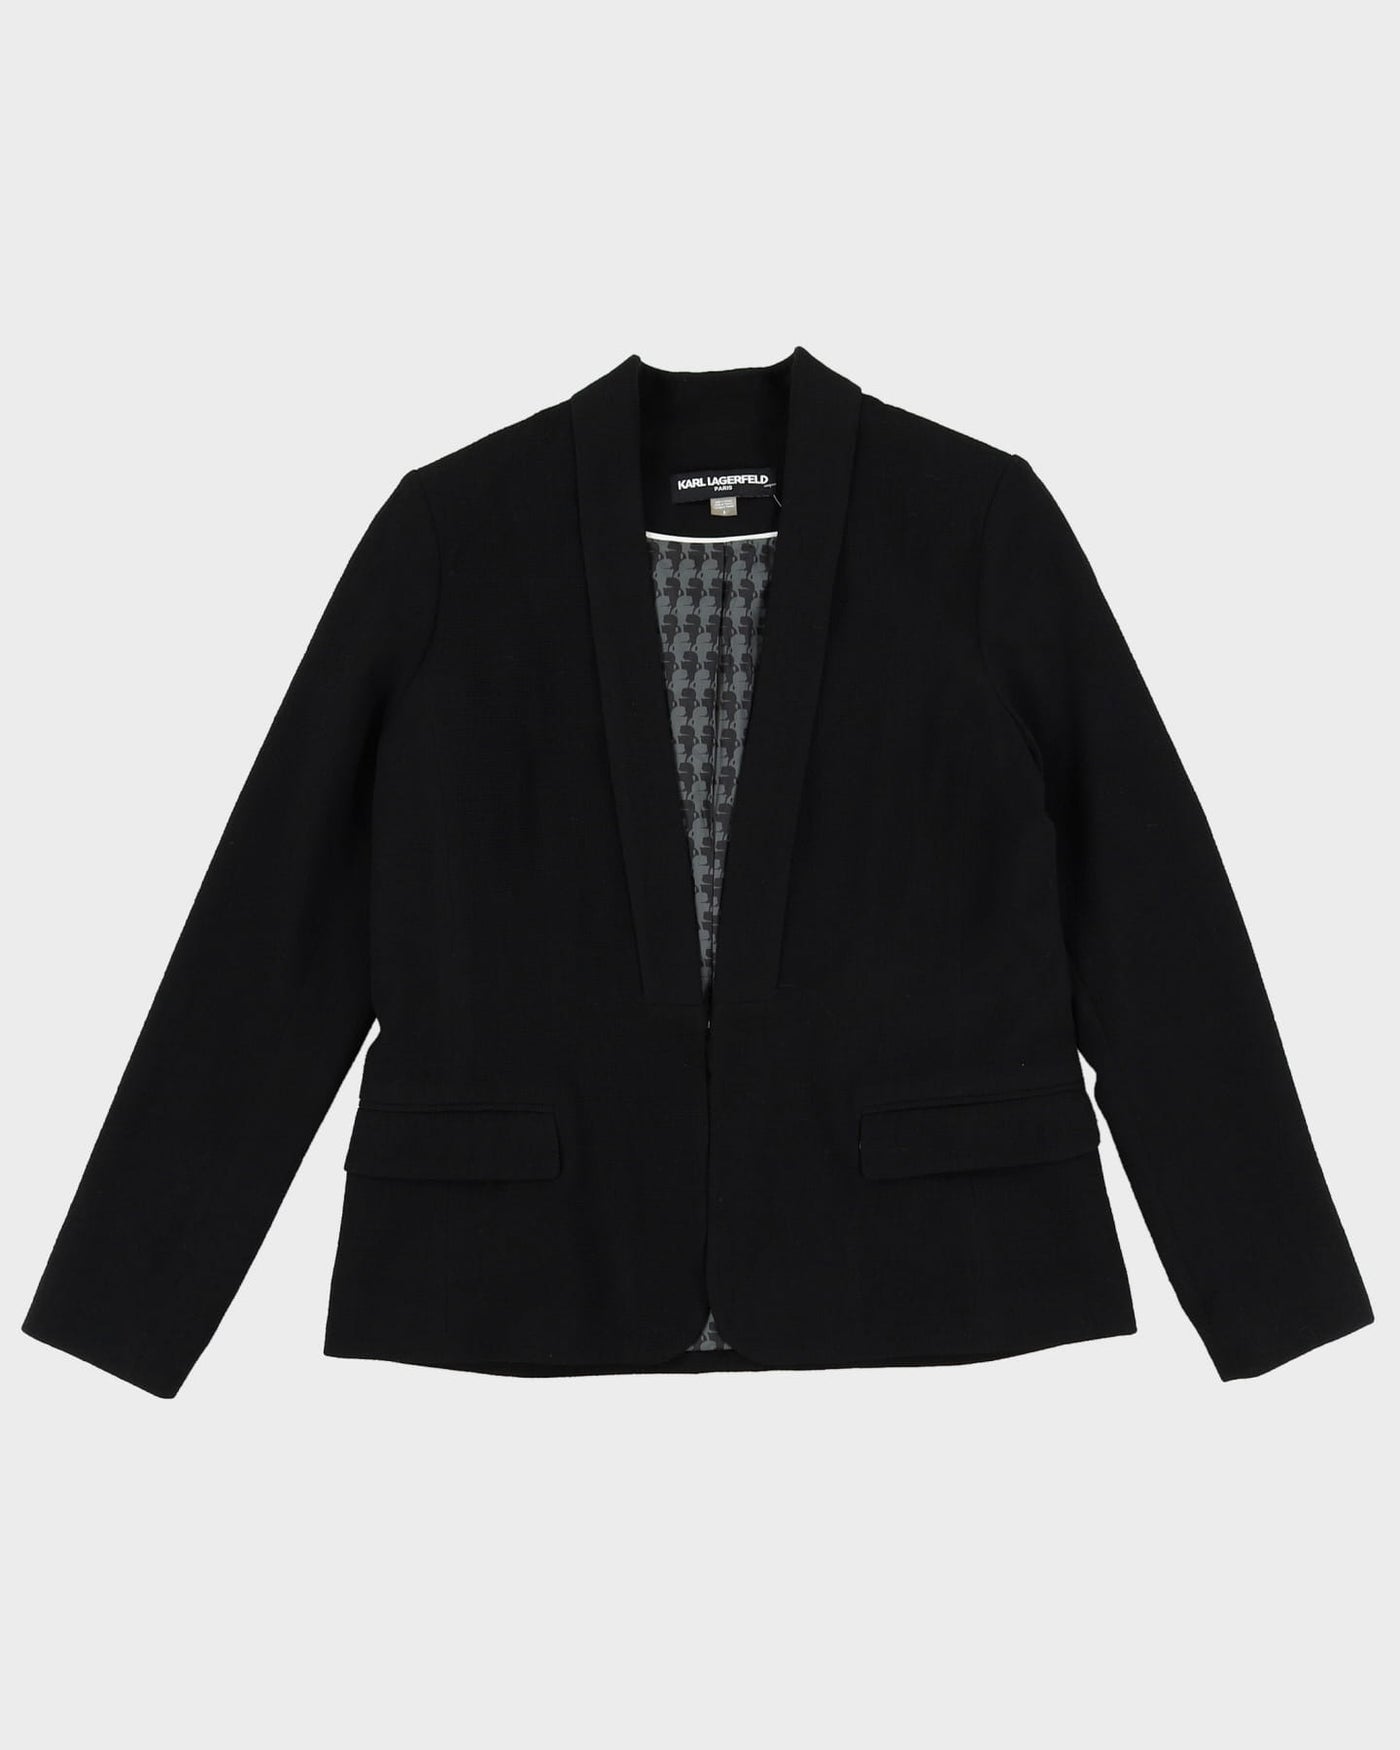 Karl Lagerfeld Black Blazer Jacket - S / M